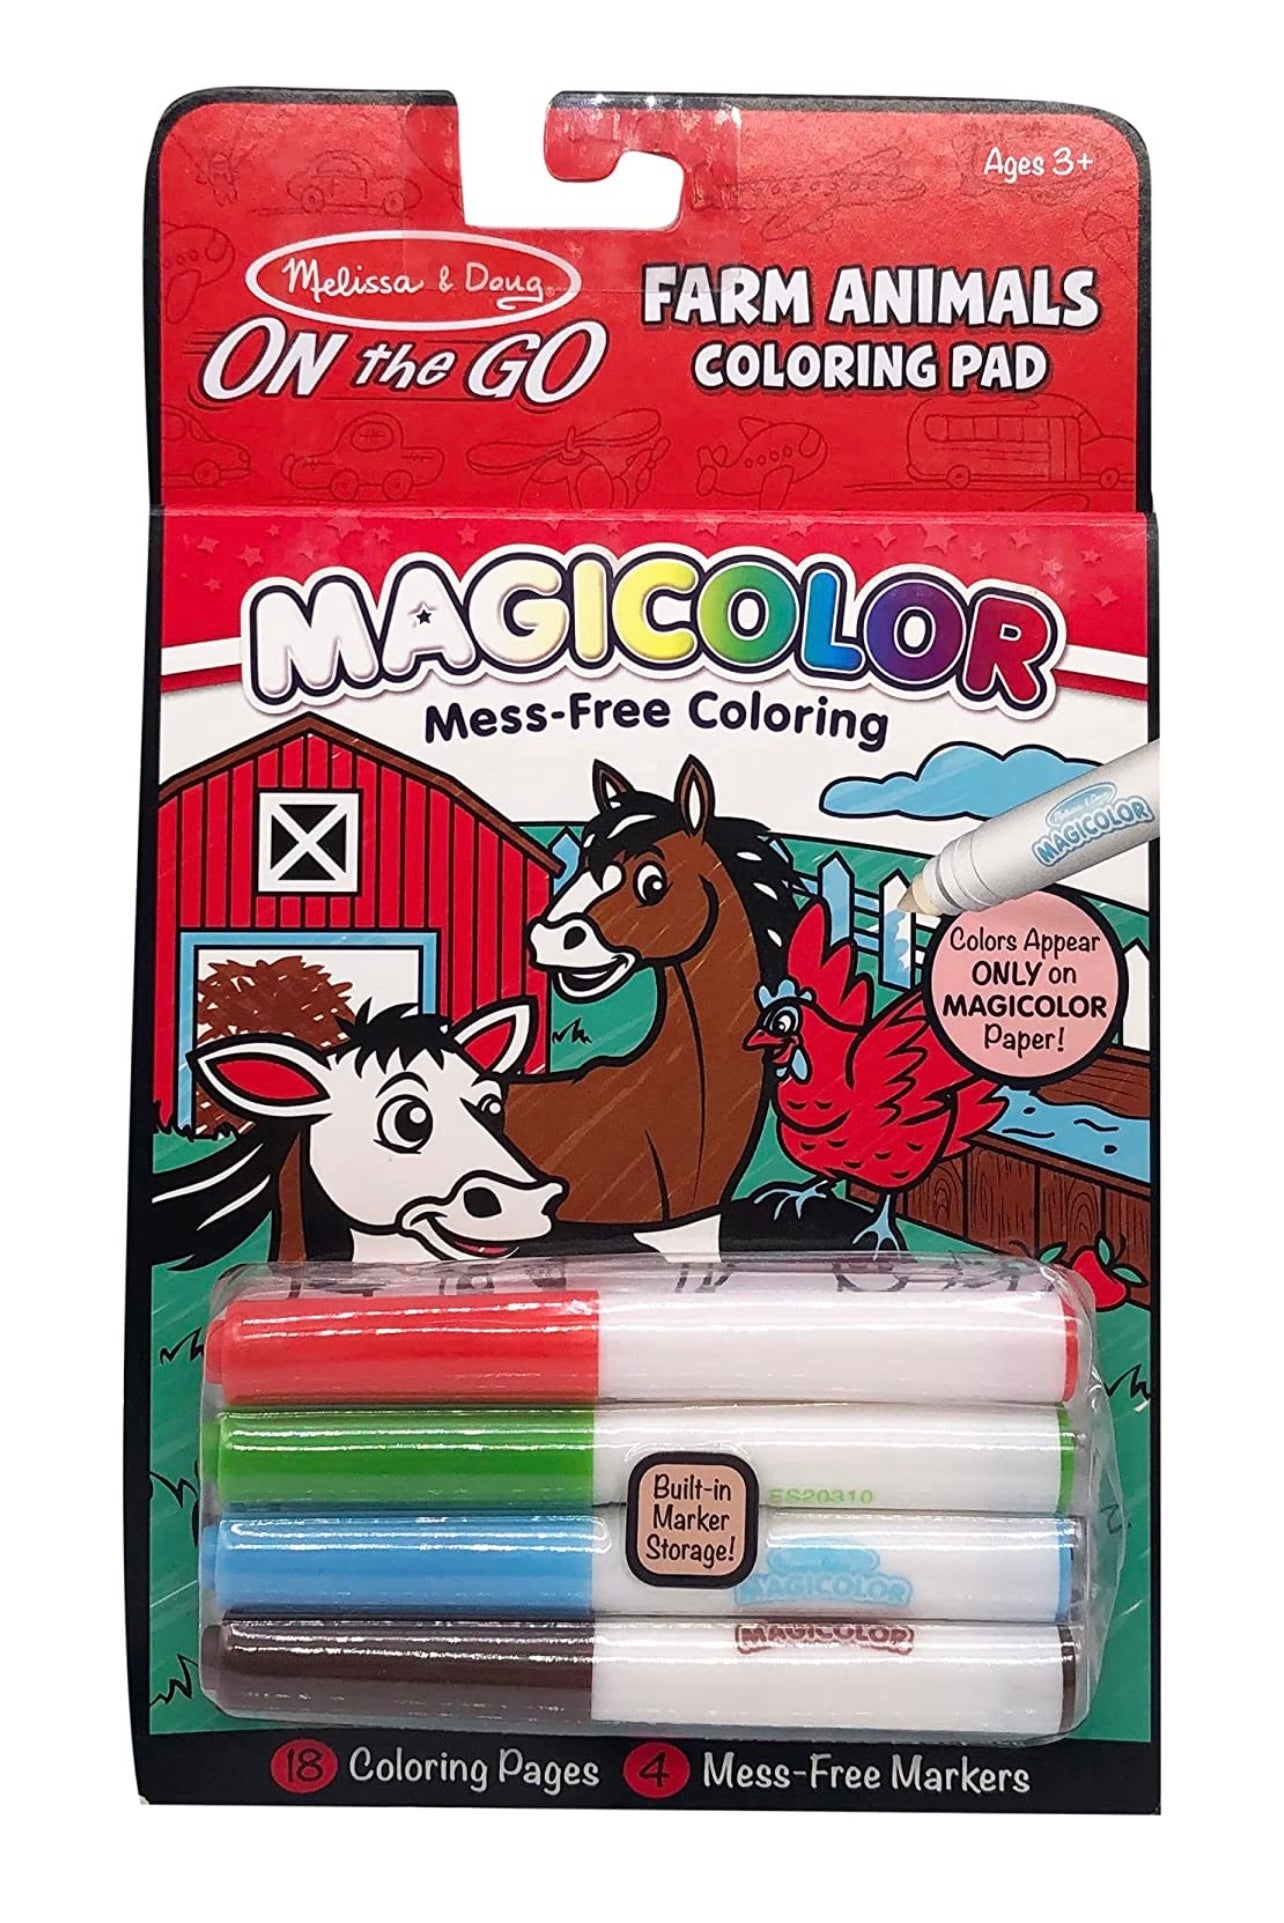 Coloring Pad - Magicolor Farm Animals